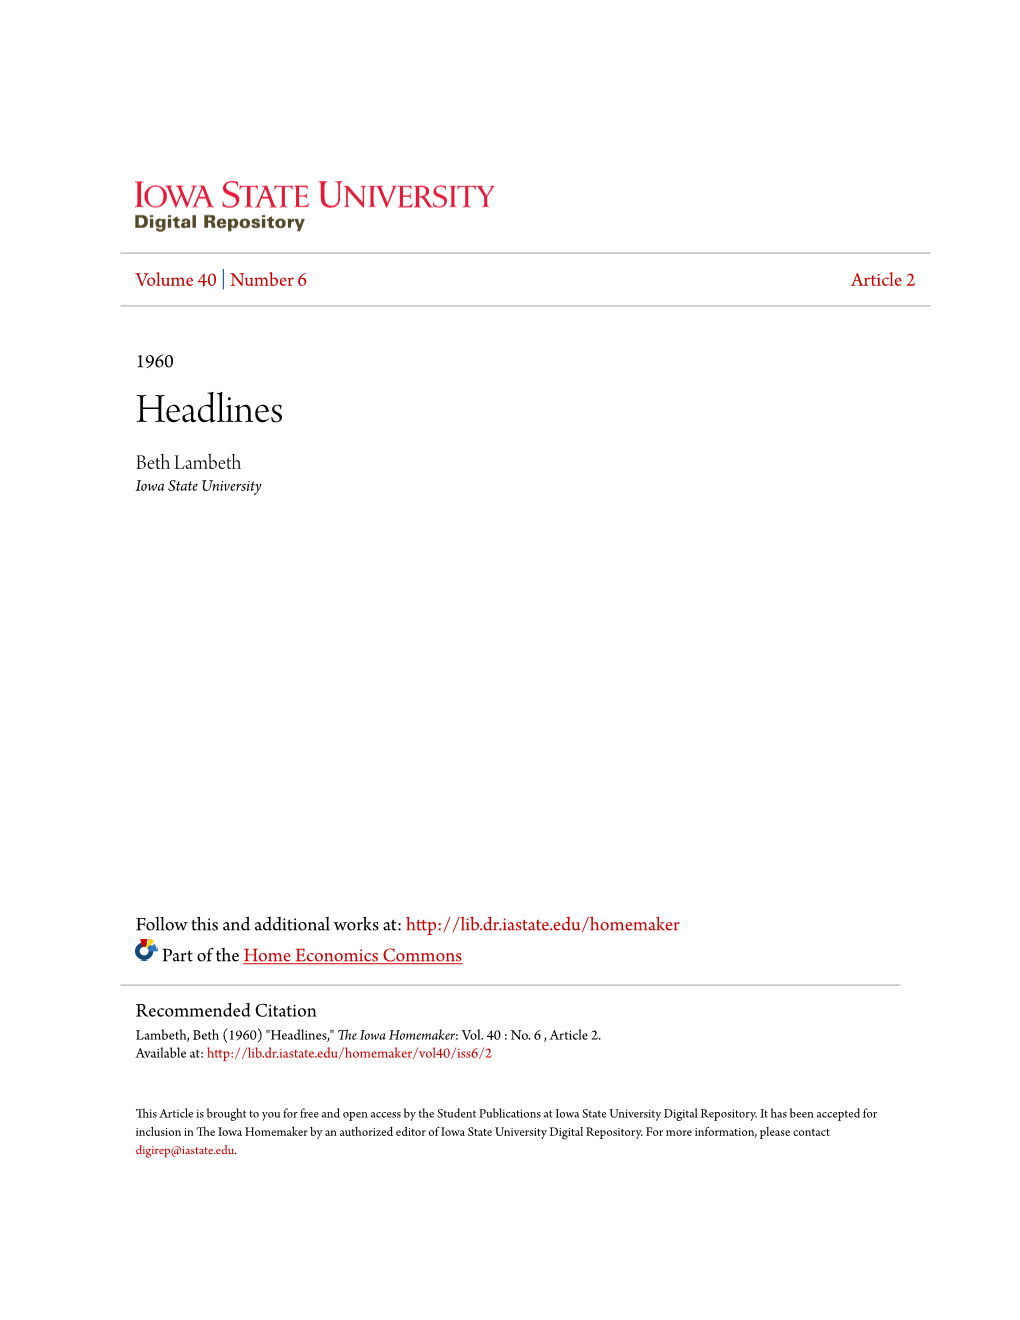 Headlines Beth Lambeth Iowa State University